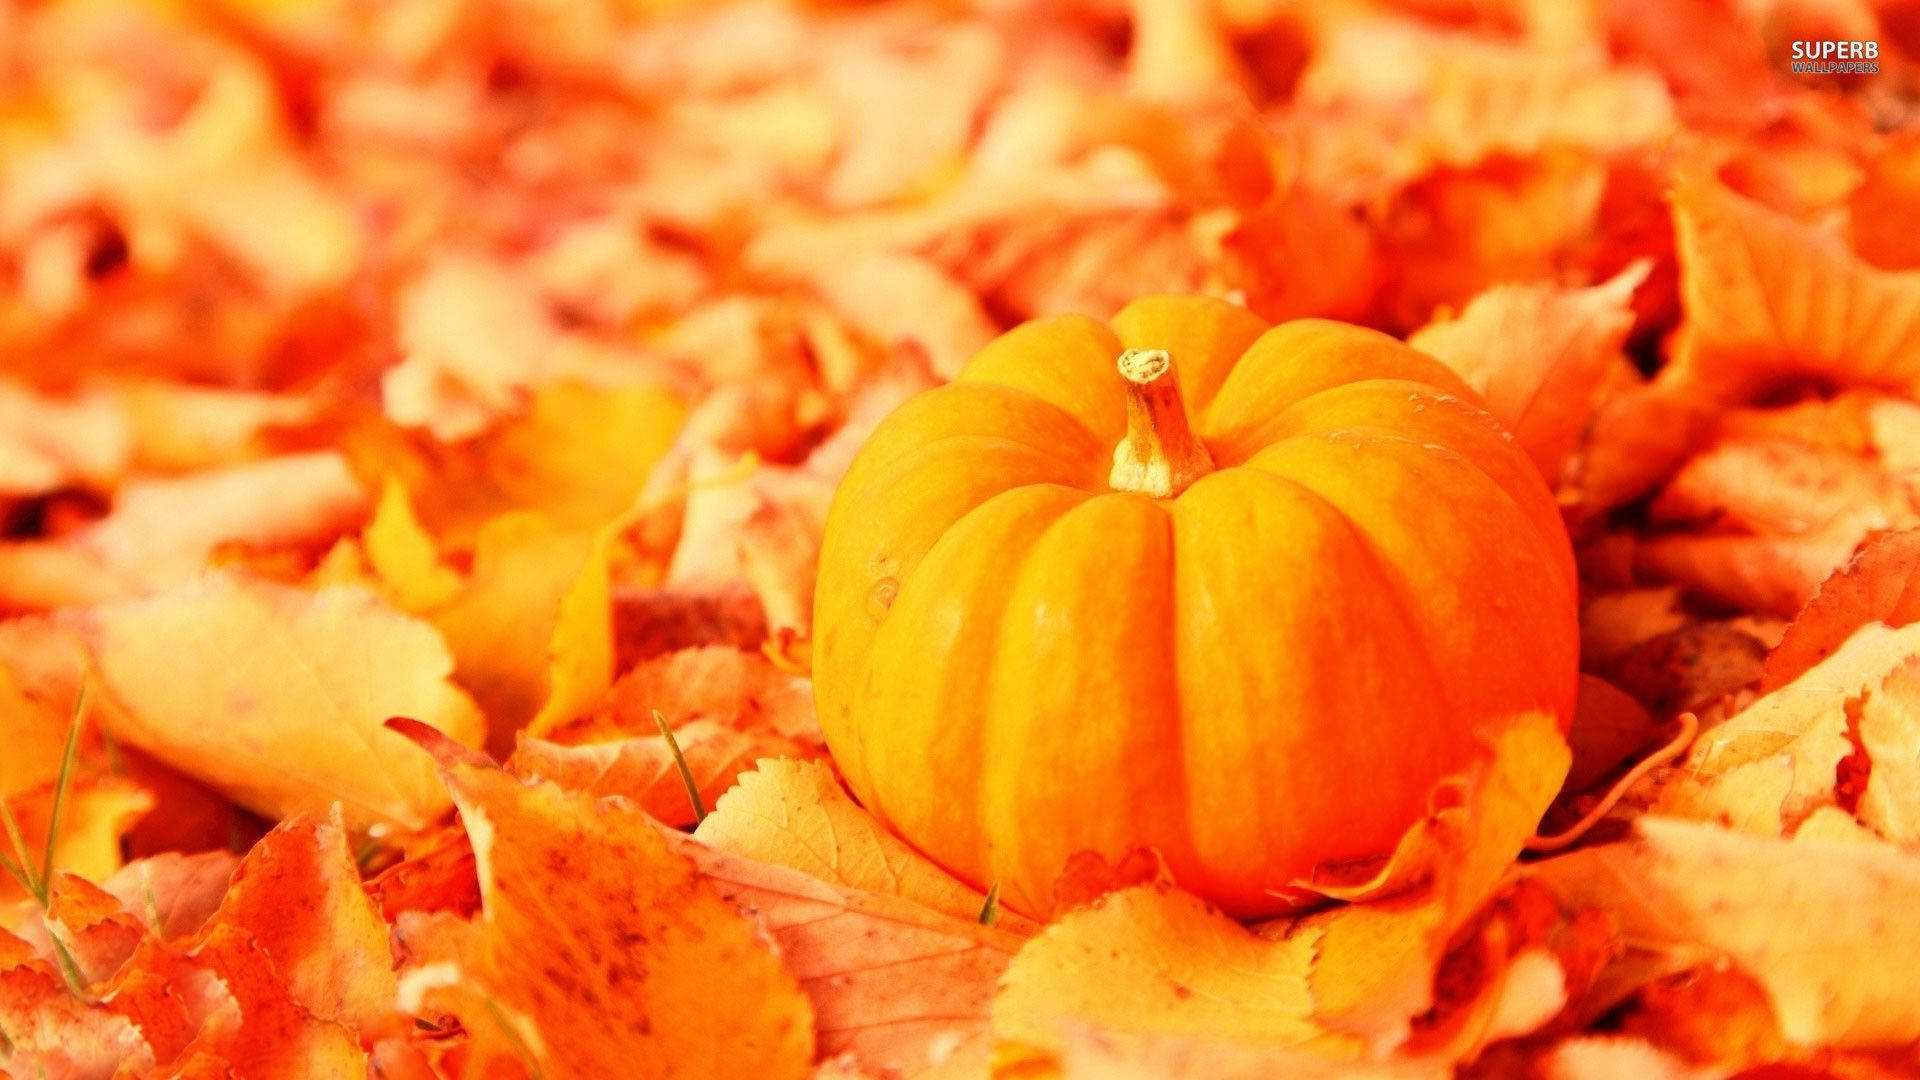 Download Pumpkin In Autumn Wallpaper